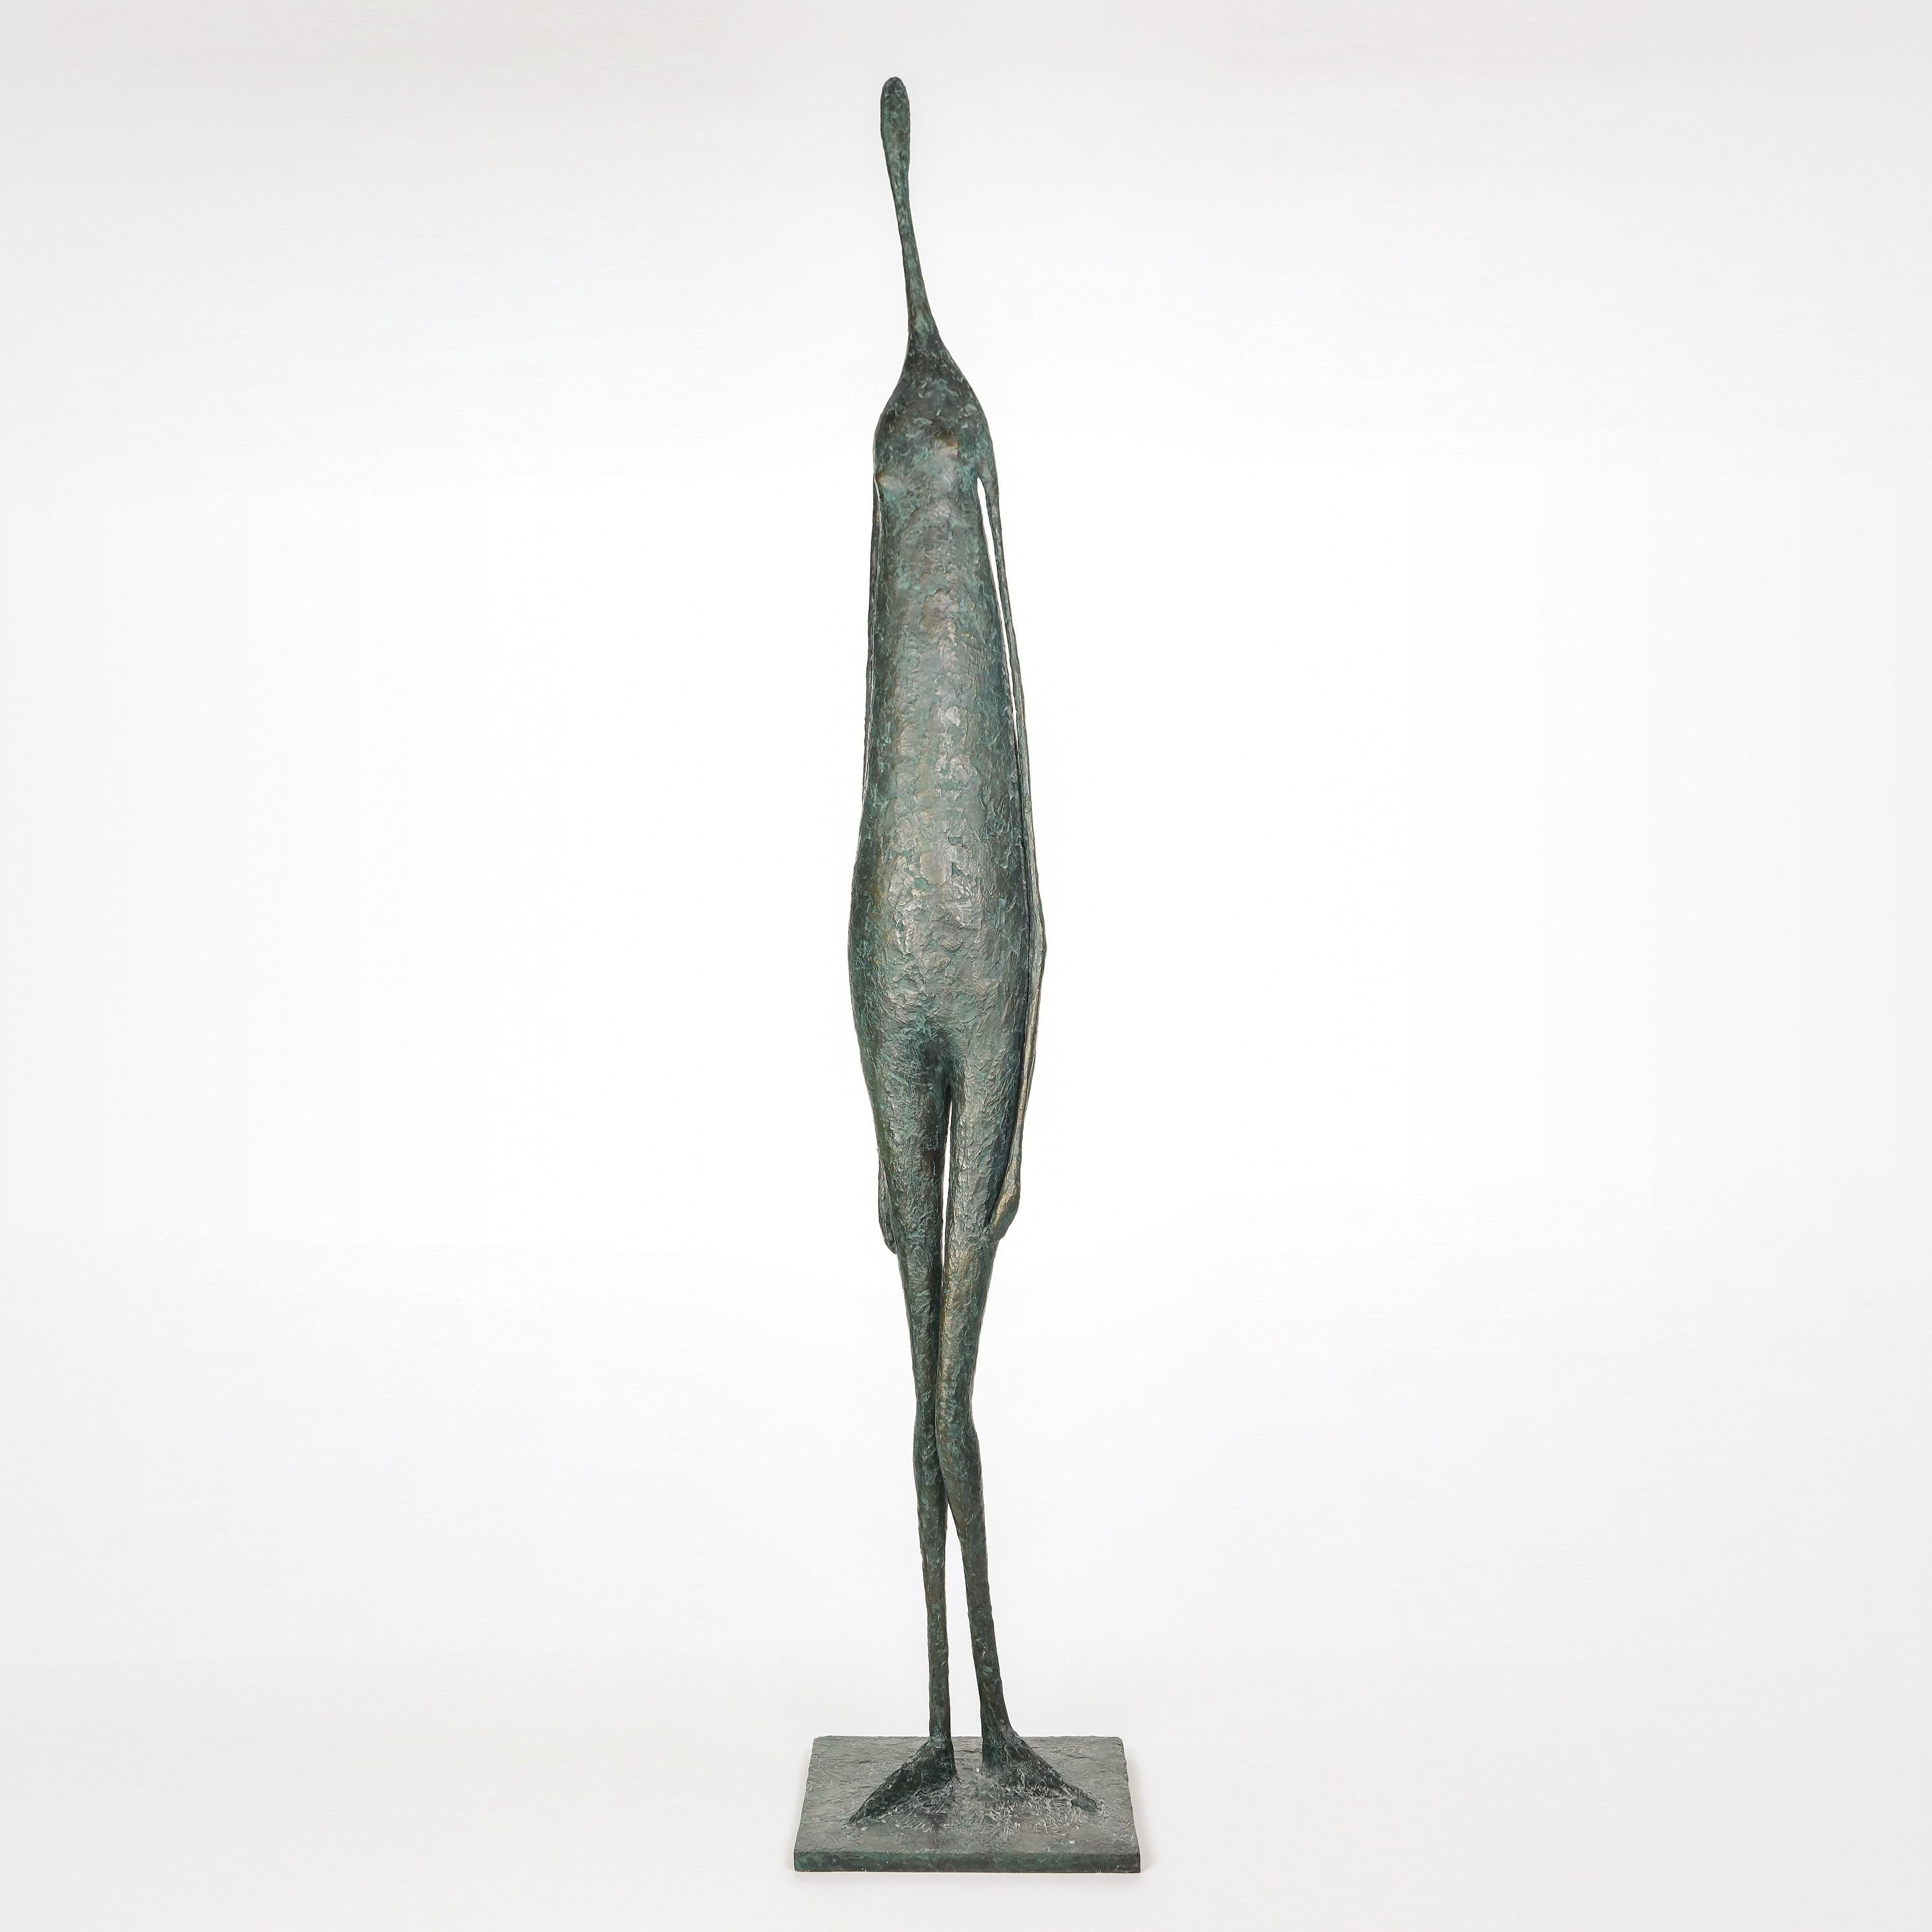 Large Standing Figure IV (contemporary bronze sculpture)